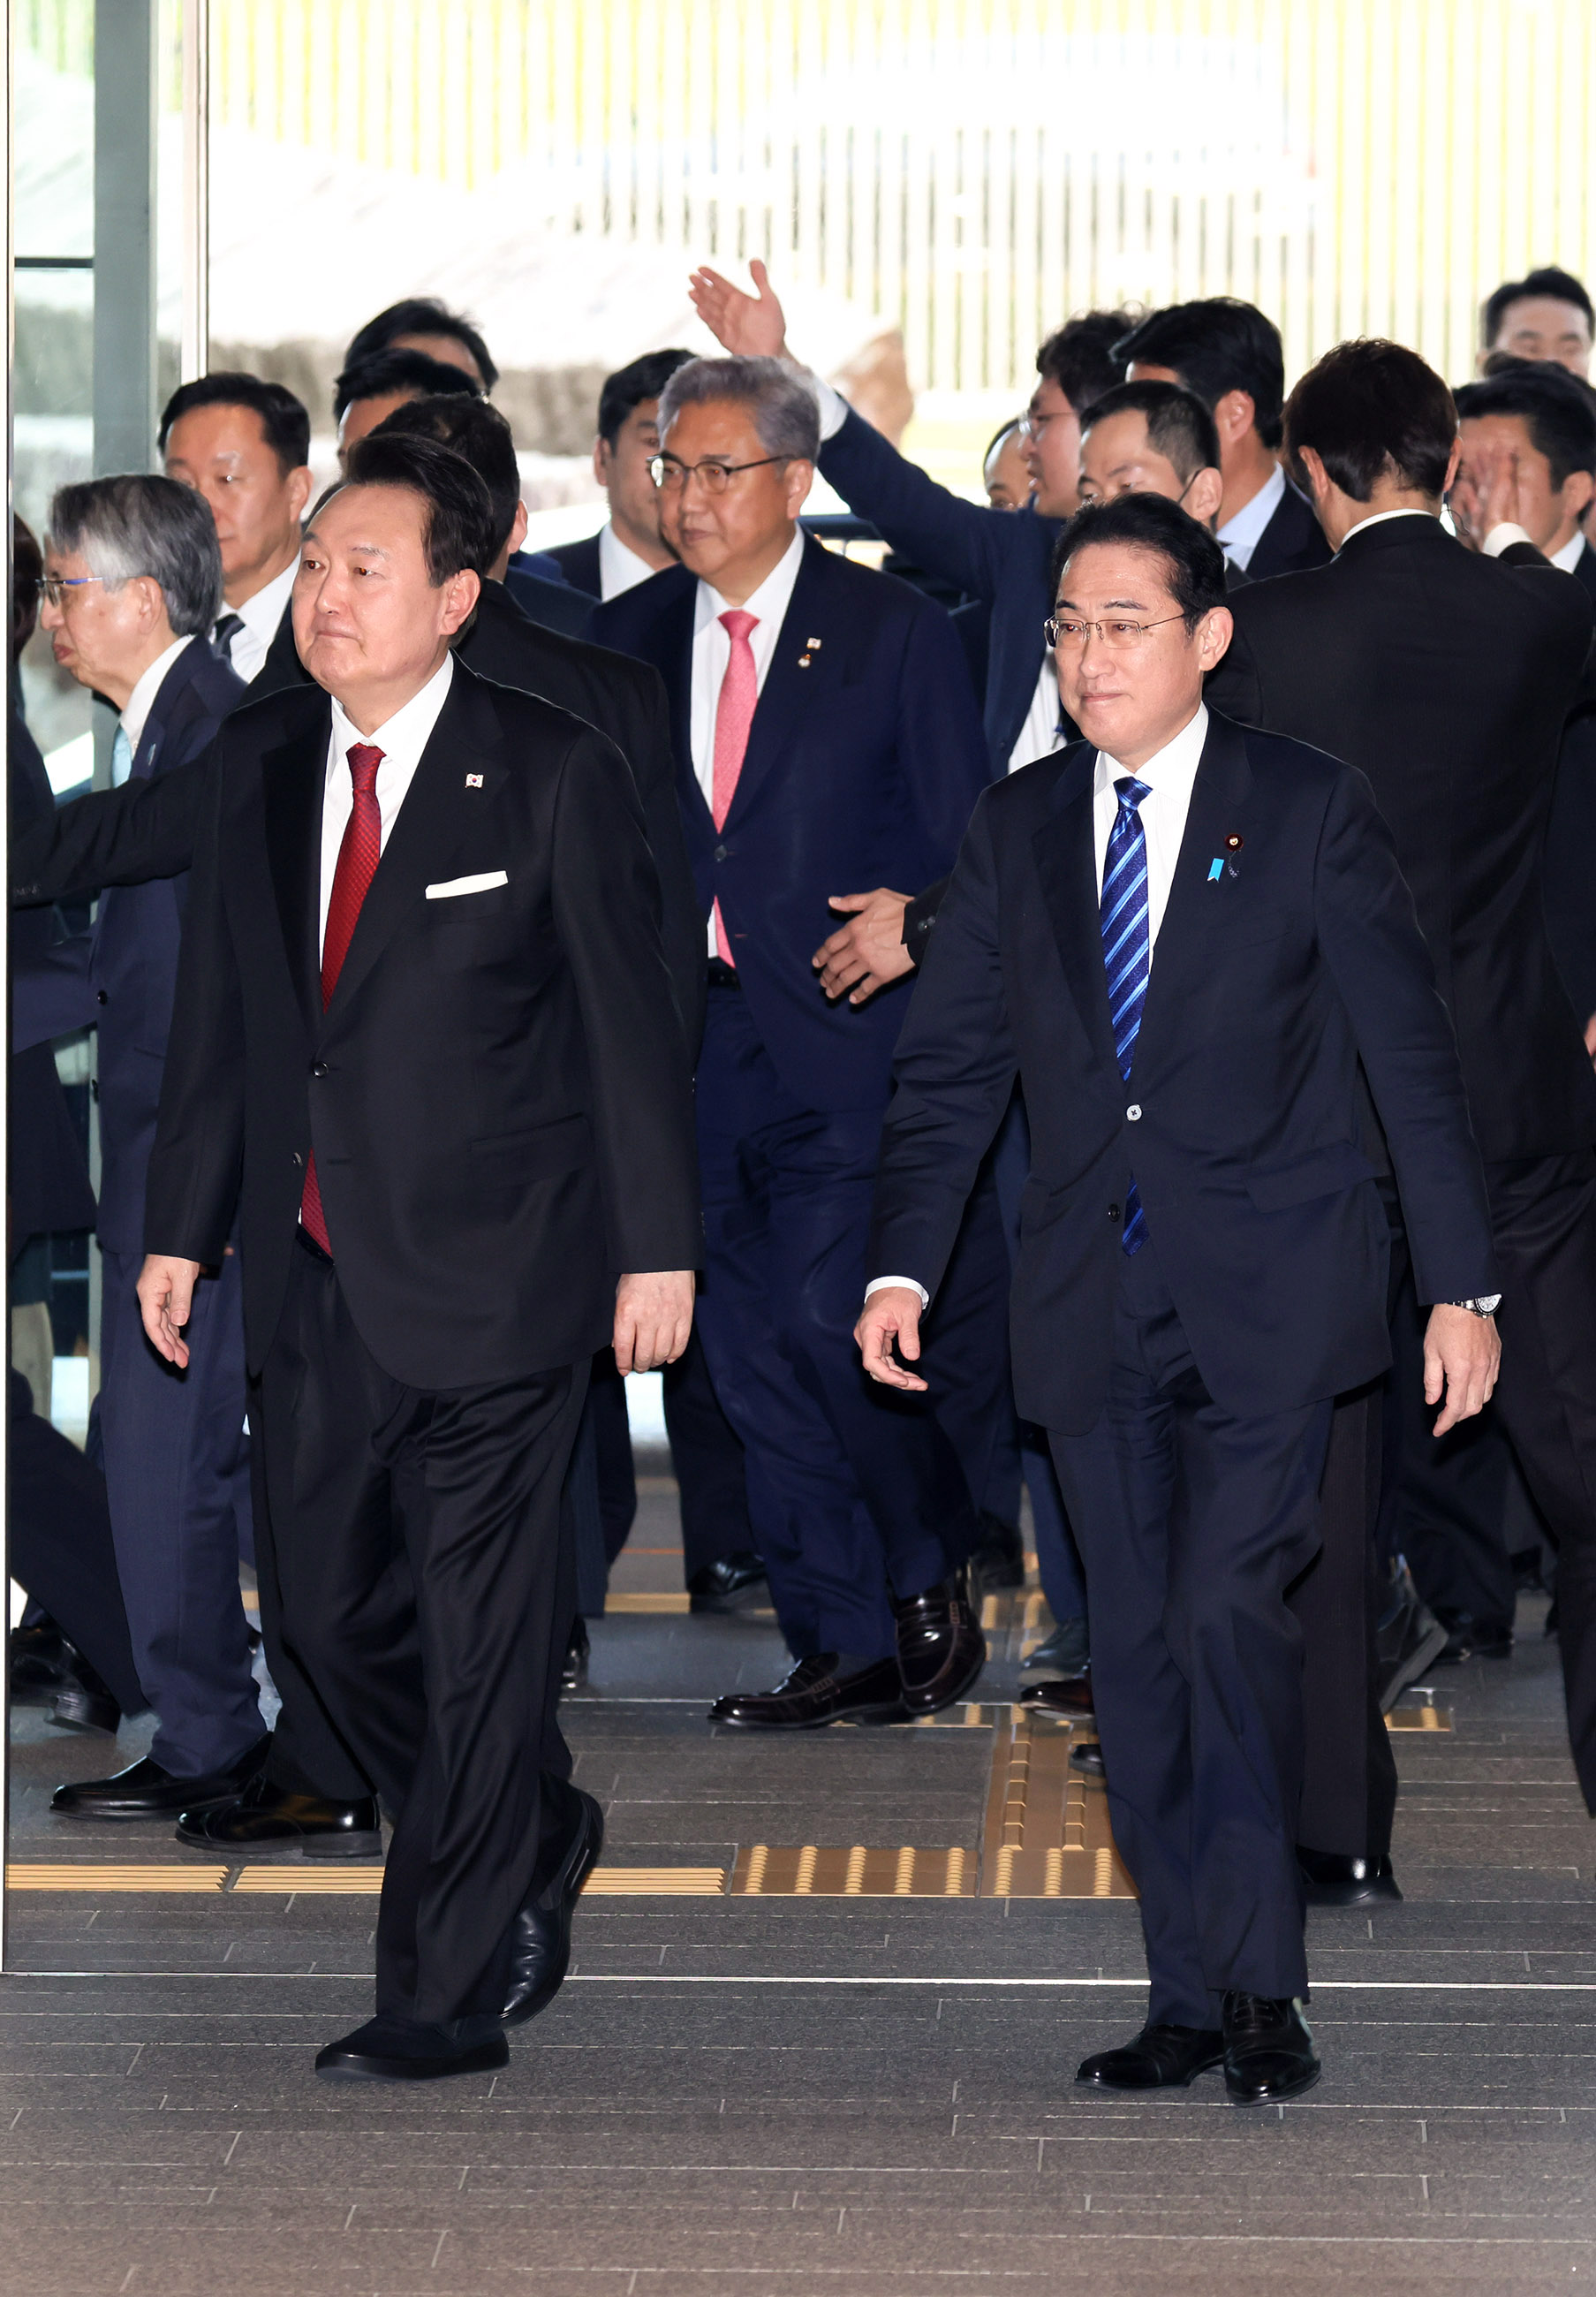 Japan-ROK summit meeting (small-group meeting)